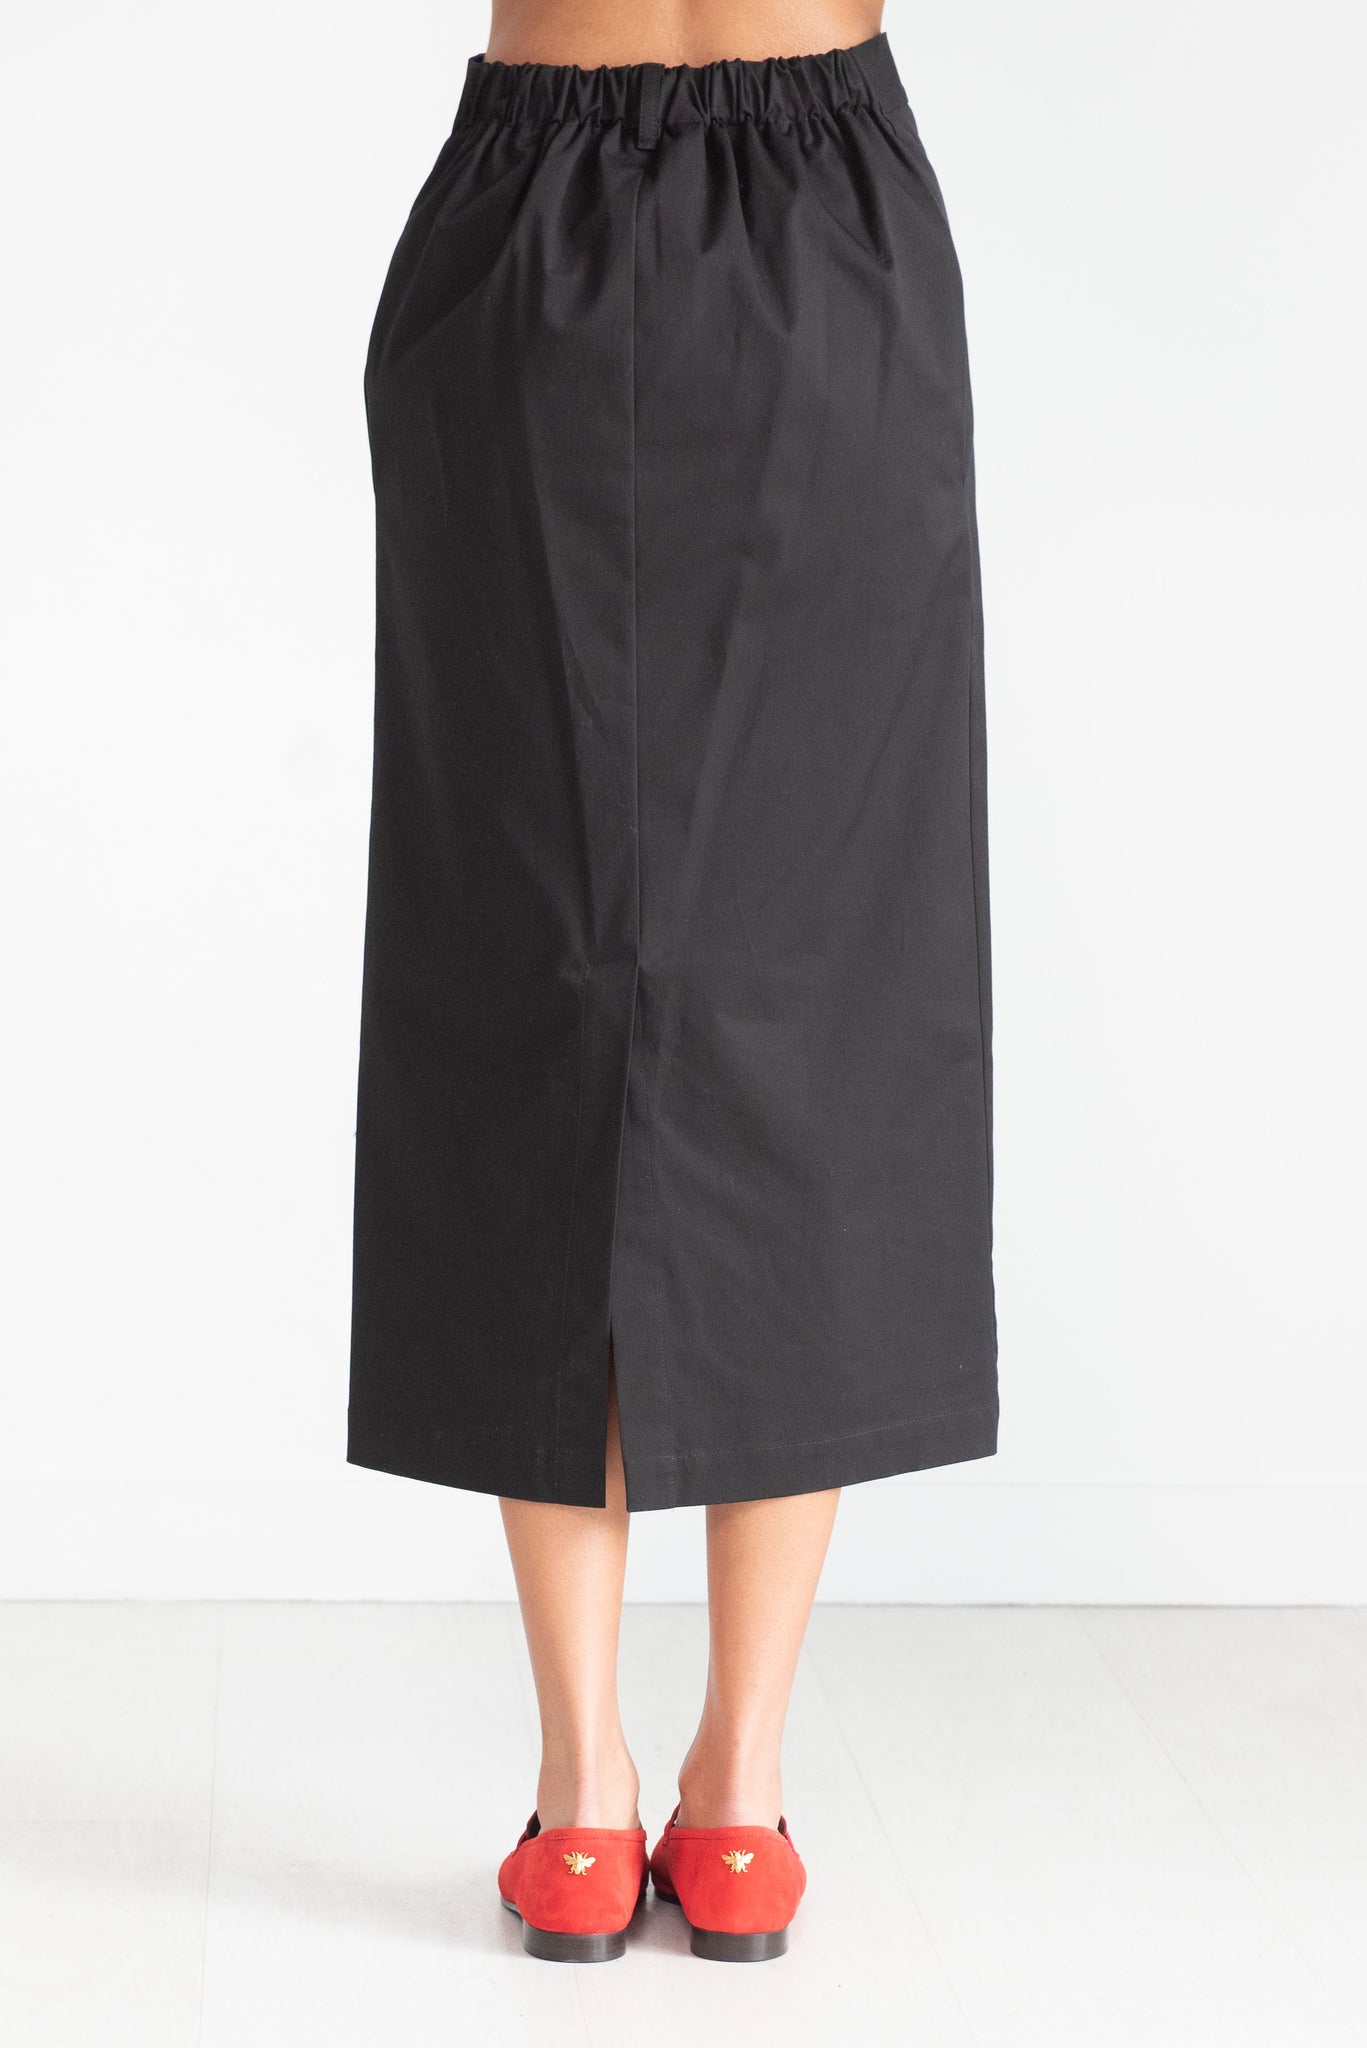 Hache - Everyday Skirt, Black